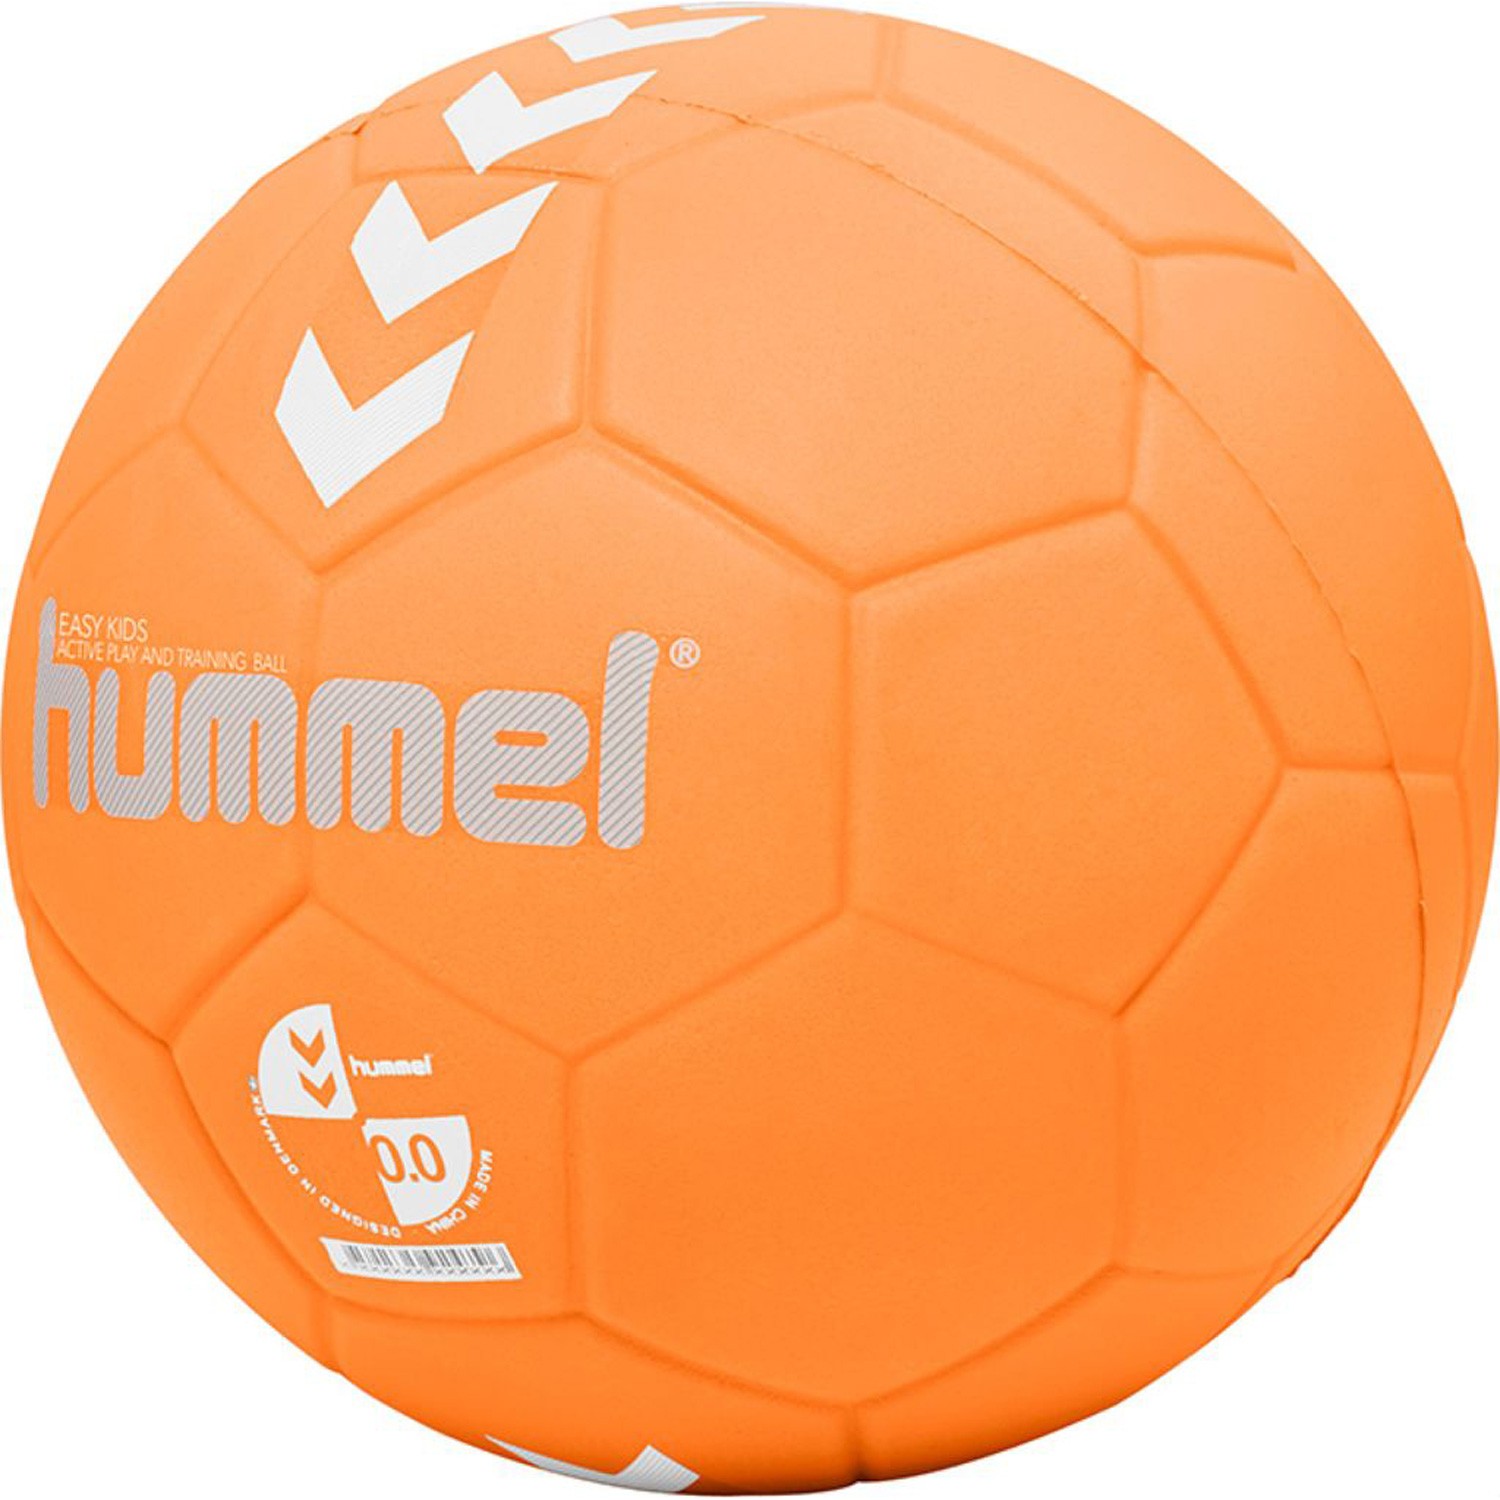 Hummel Handball Easy Kinder